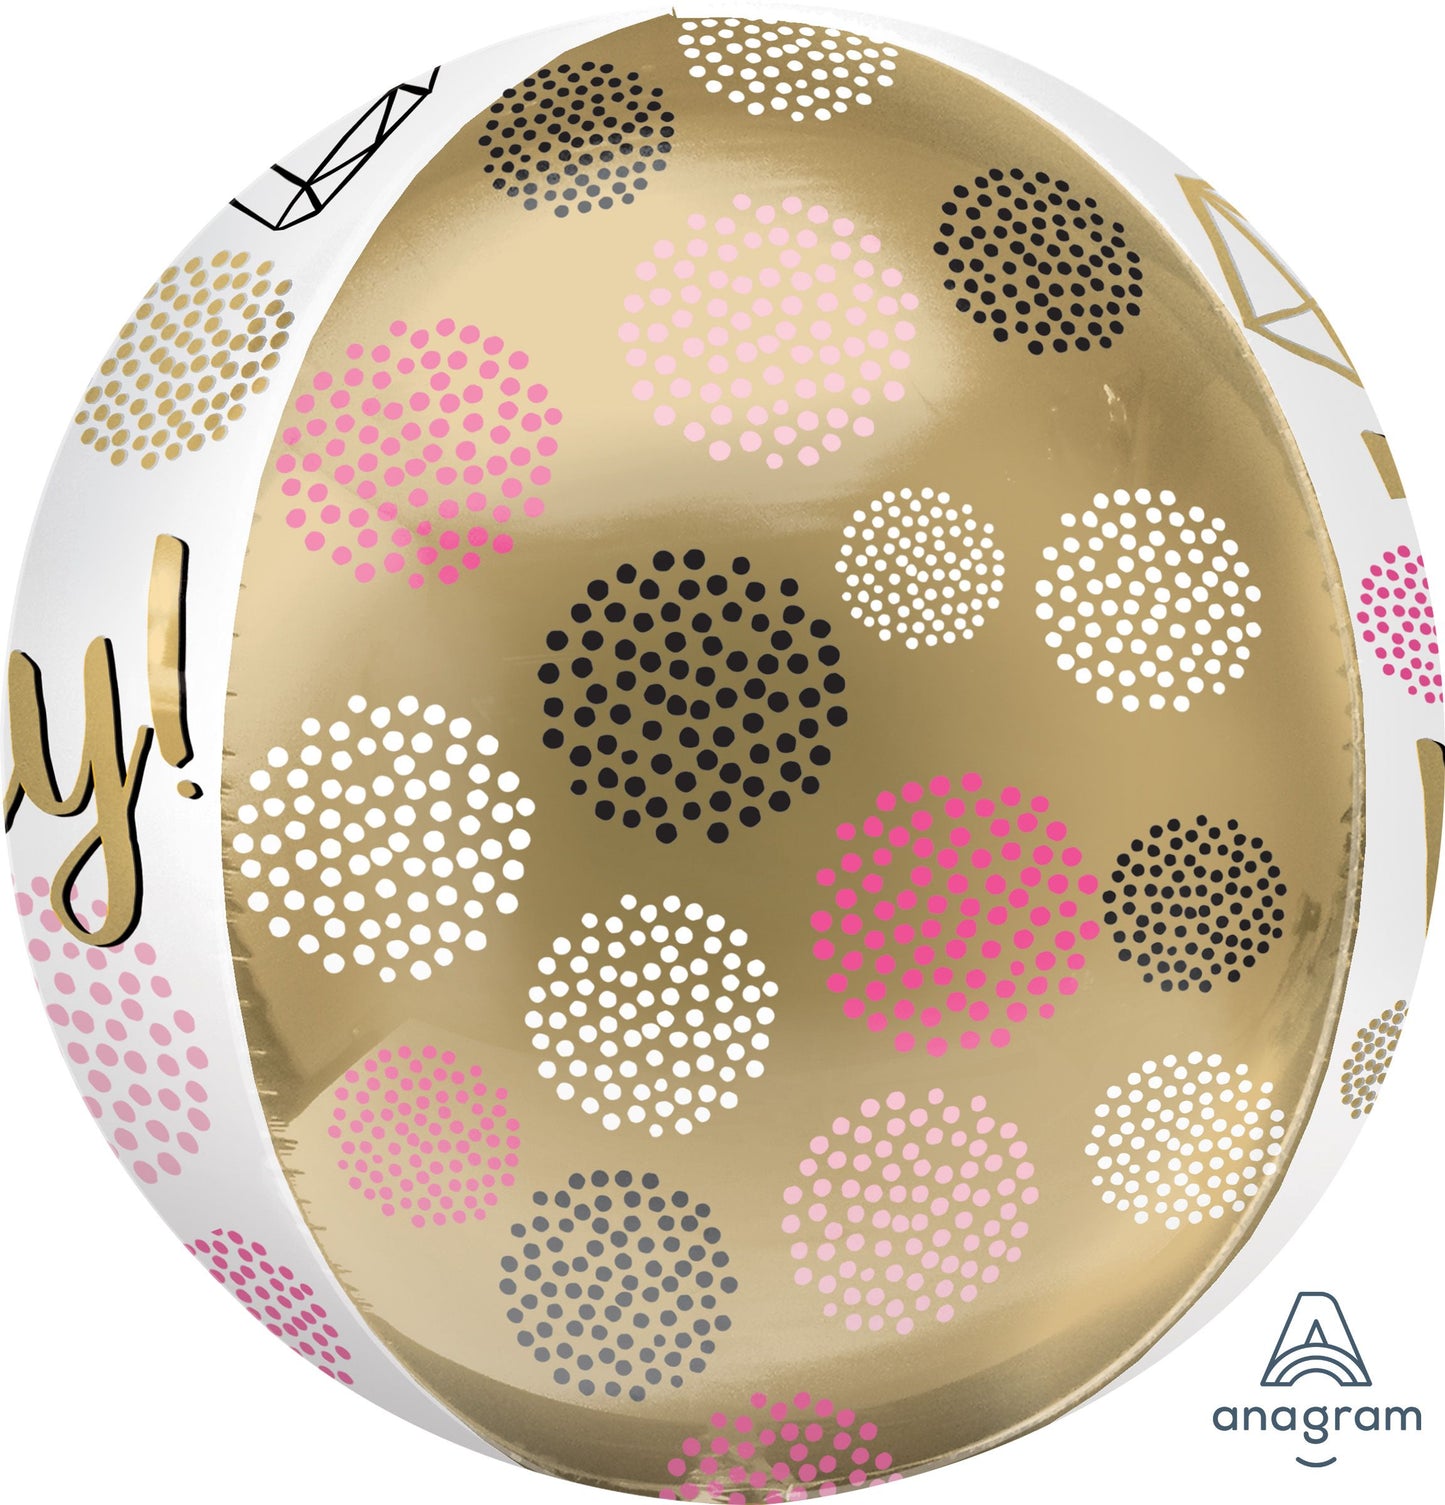 Happy Birthday - Pink & Gold - Orbz Balloon 16"